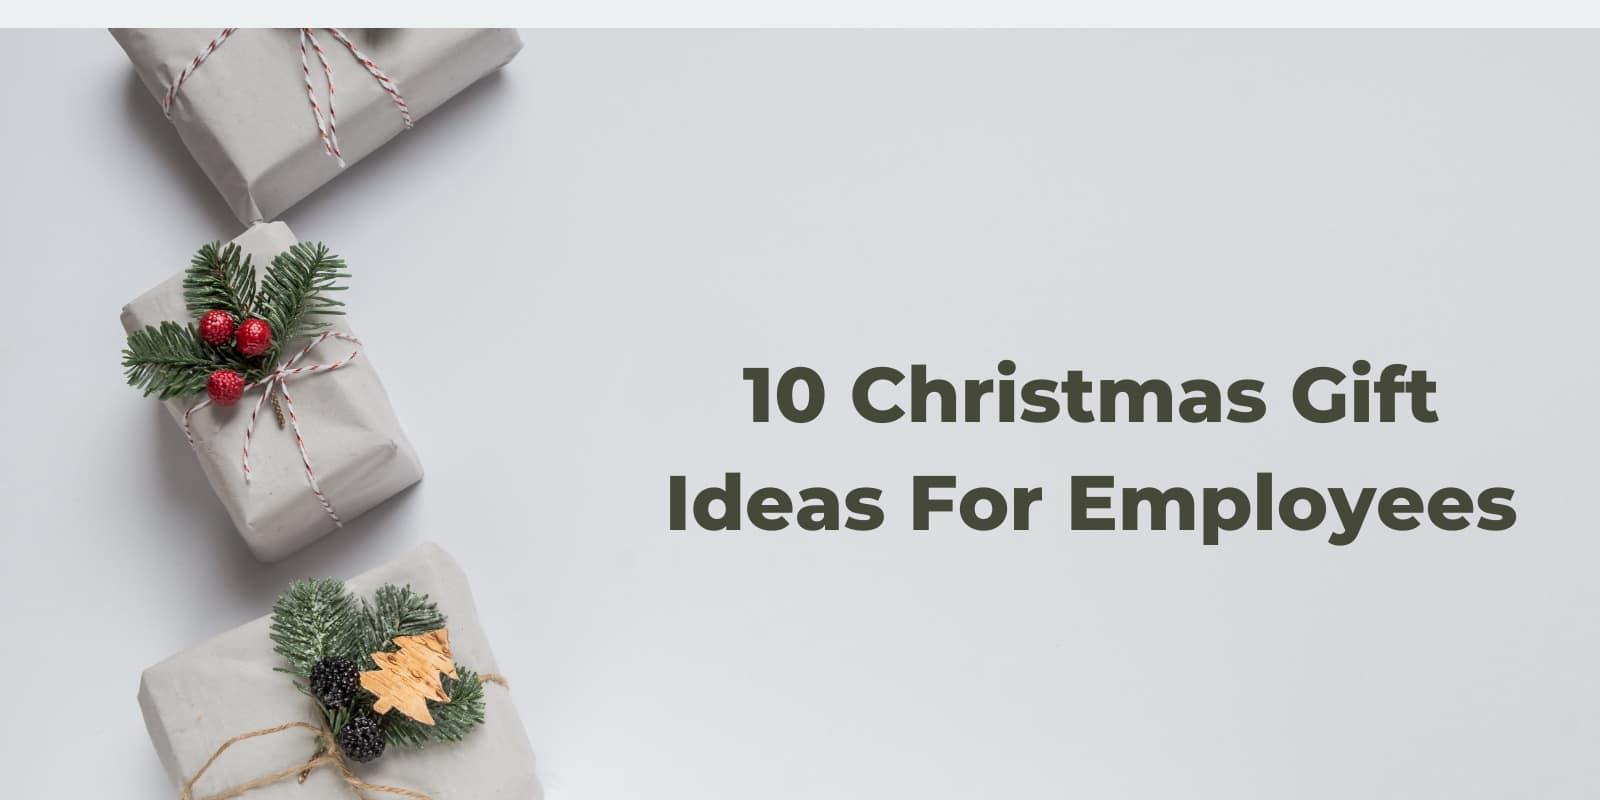 https://thethrivingsmallbusiness.com/wp-content/uploads/2020/12/10-Employee-Christmas-Gift-Ideas1.jpg